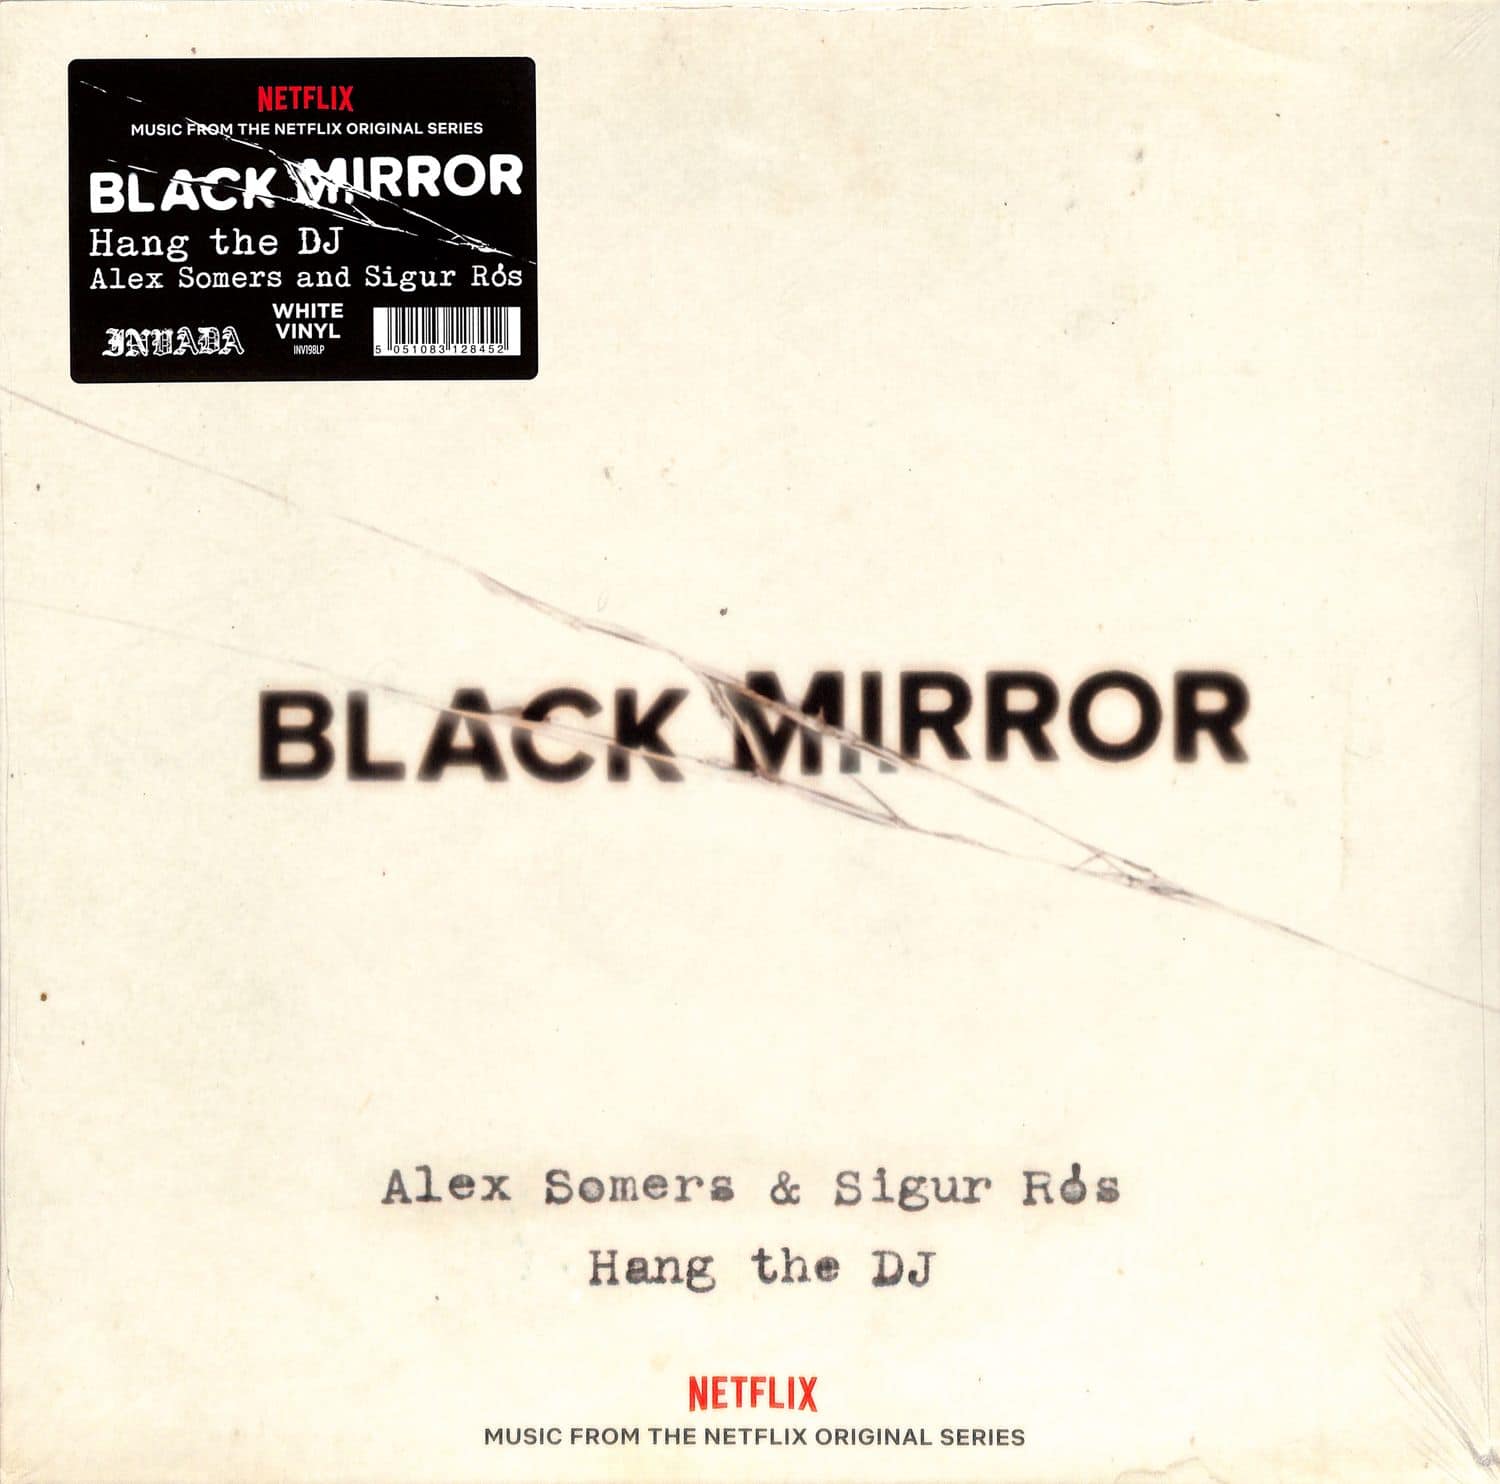 Alex Somers & Sigur Ros - BLACK MIRROR - HANG THE DJ 